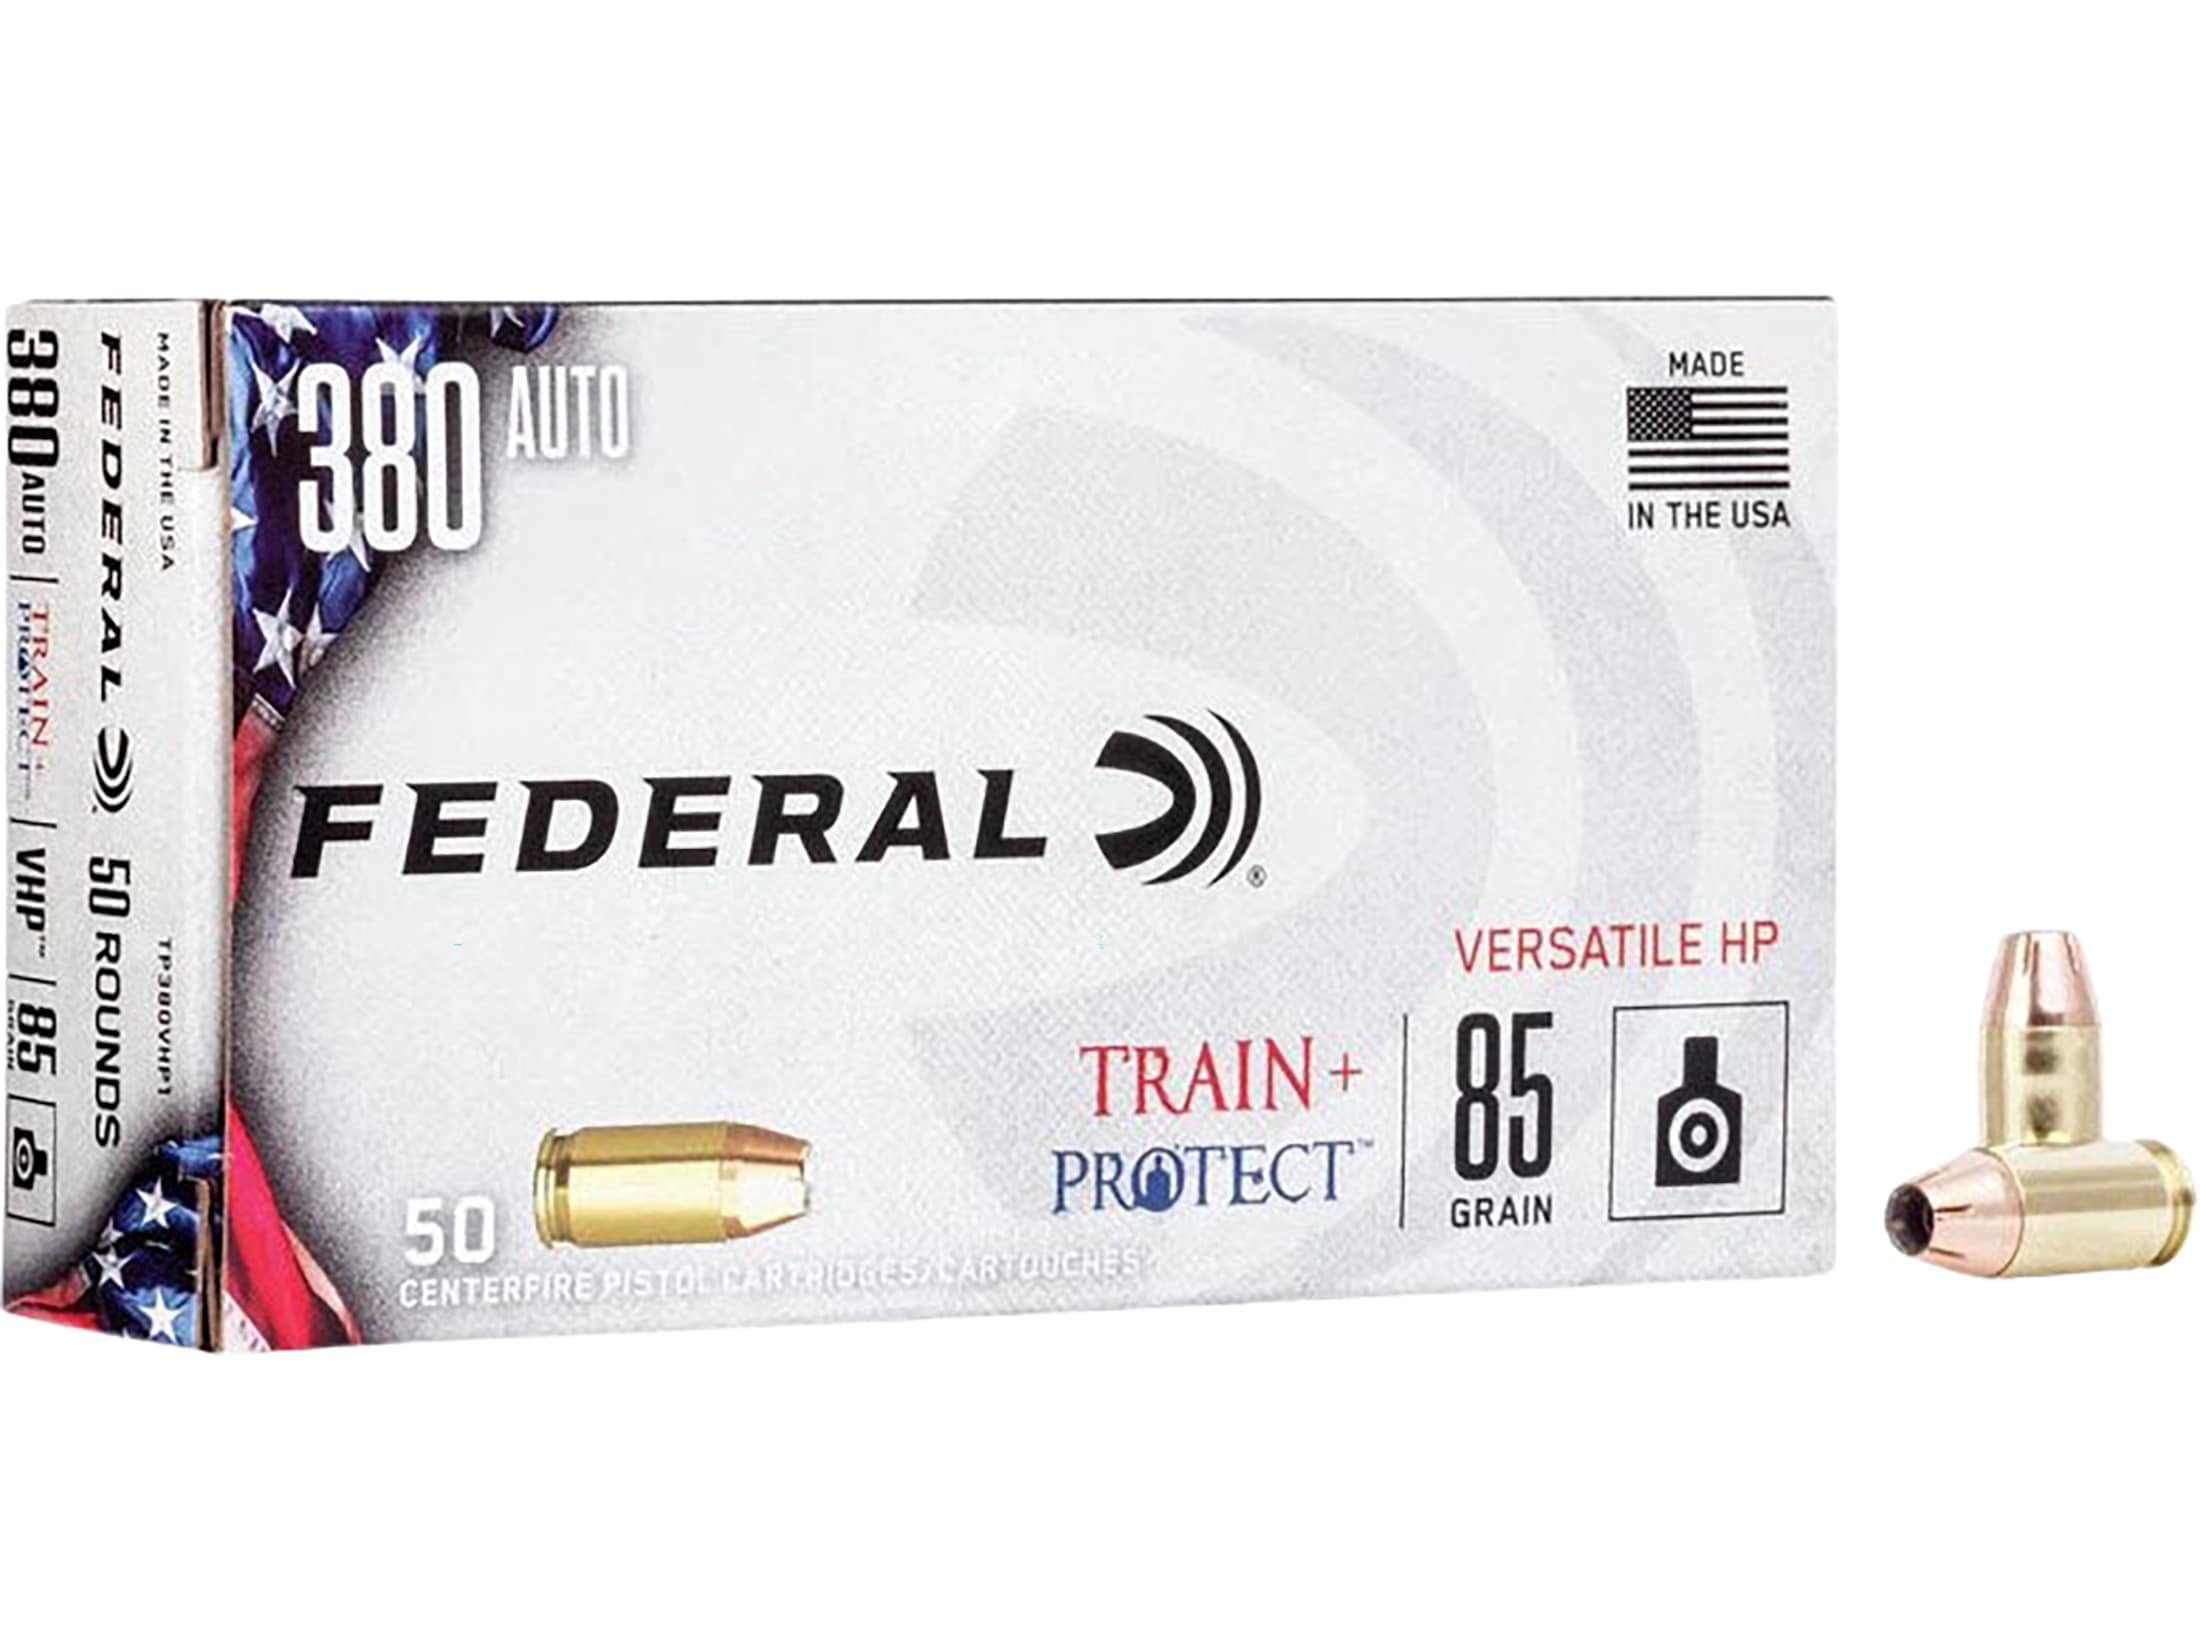 Federal Train + Protect 380 ACP Ammo 85 Grain Federal Versatile